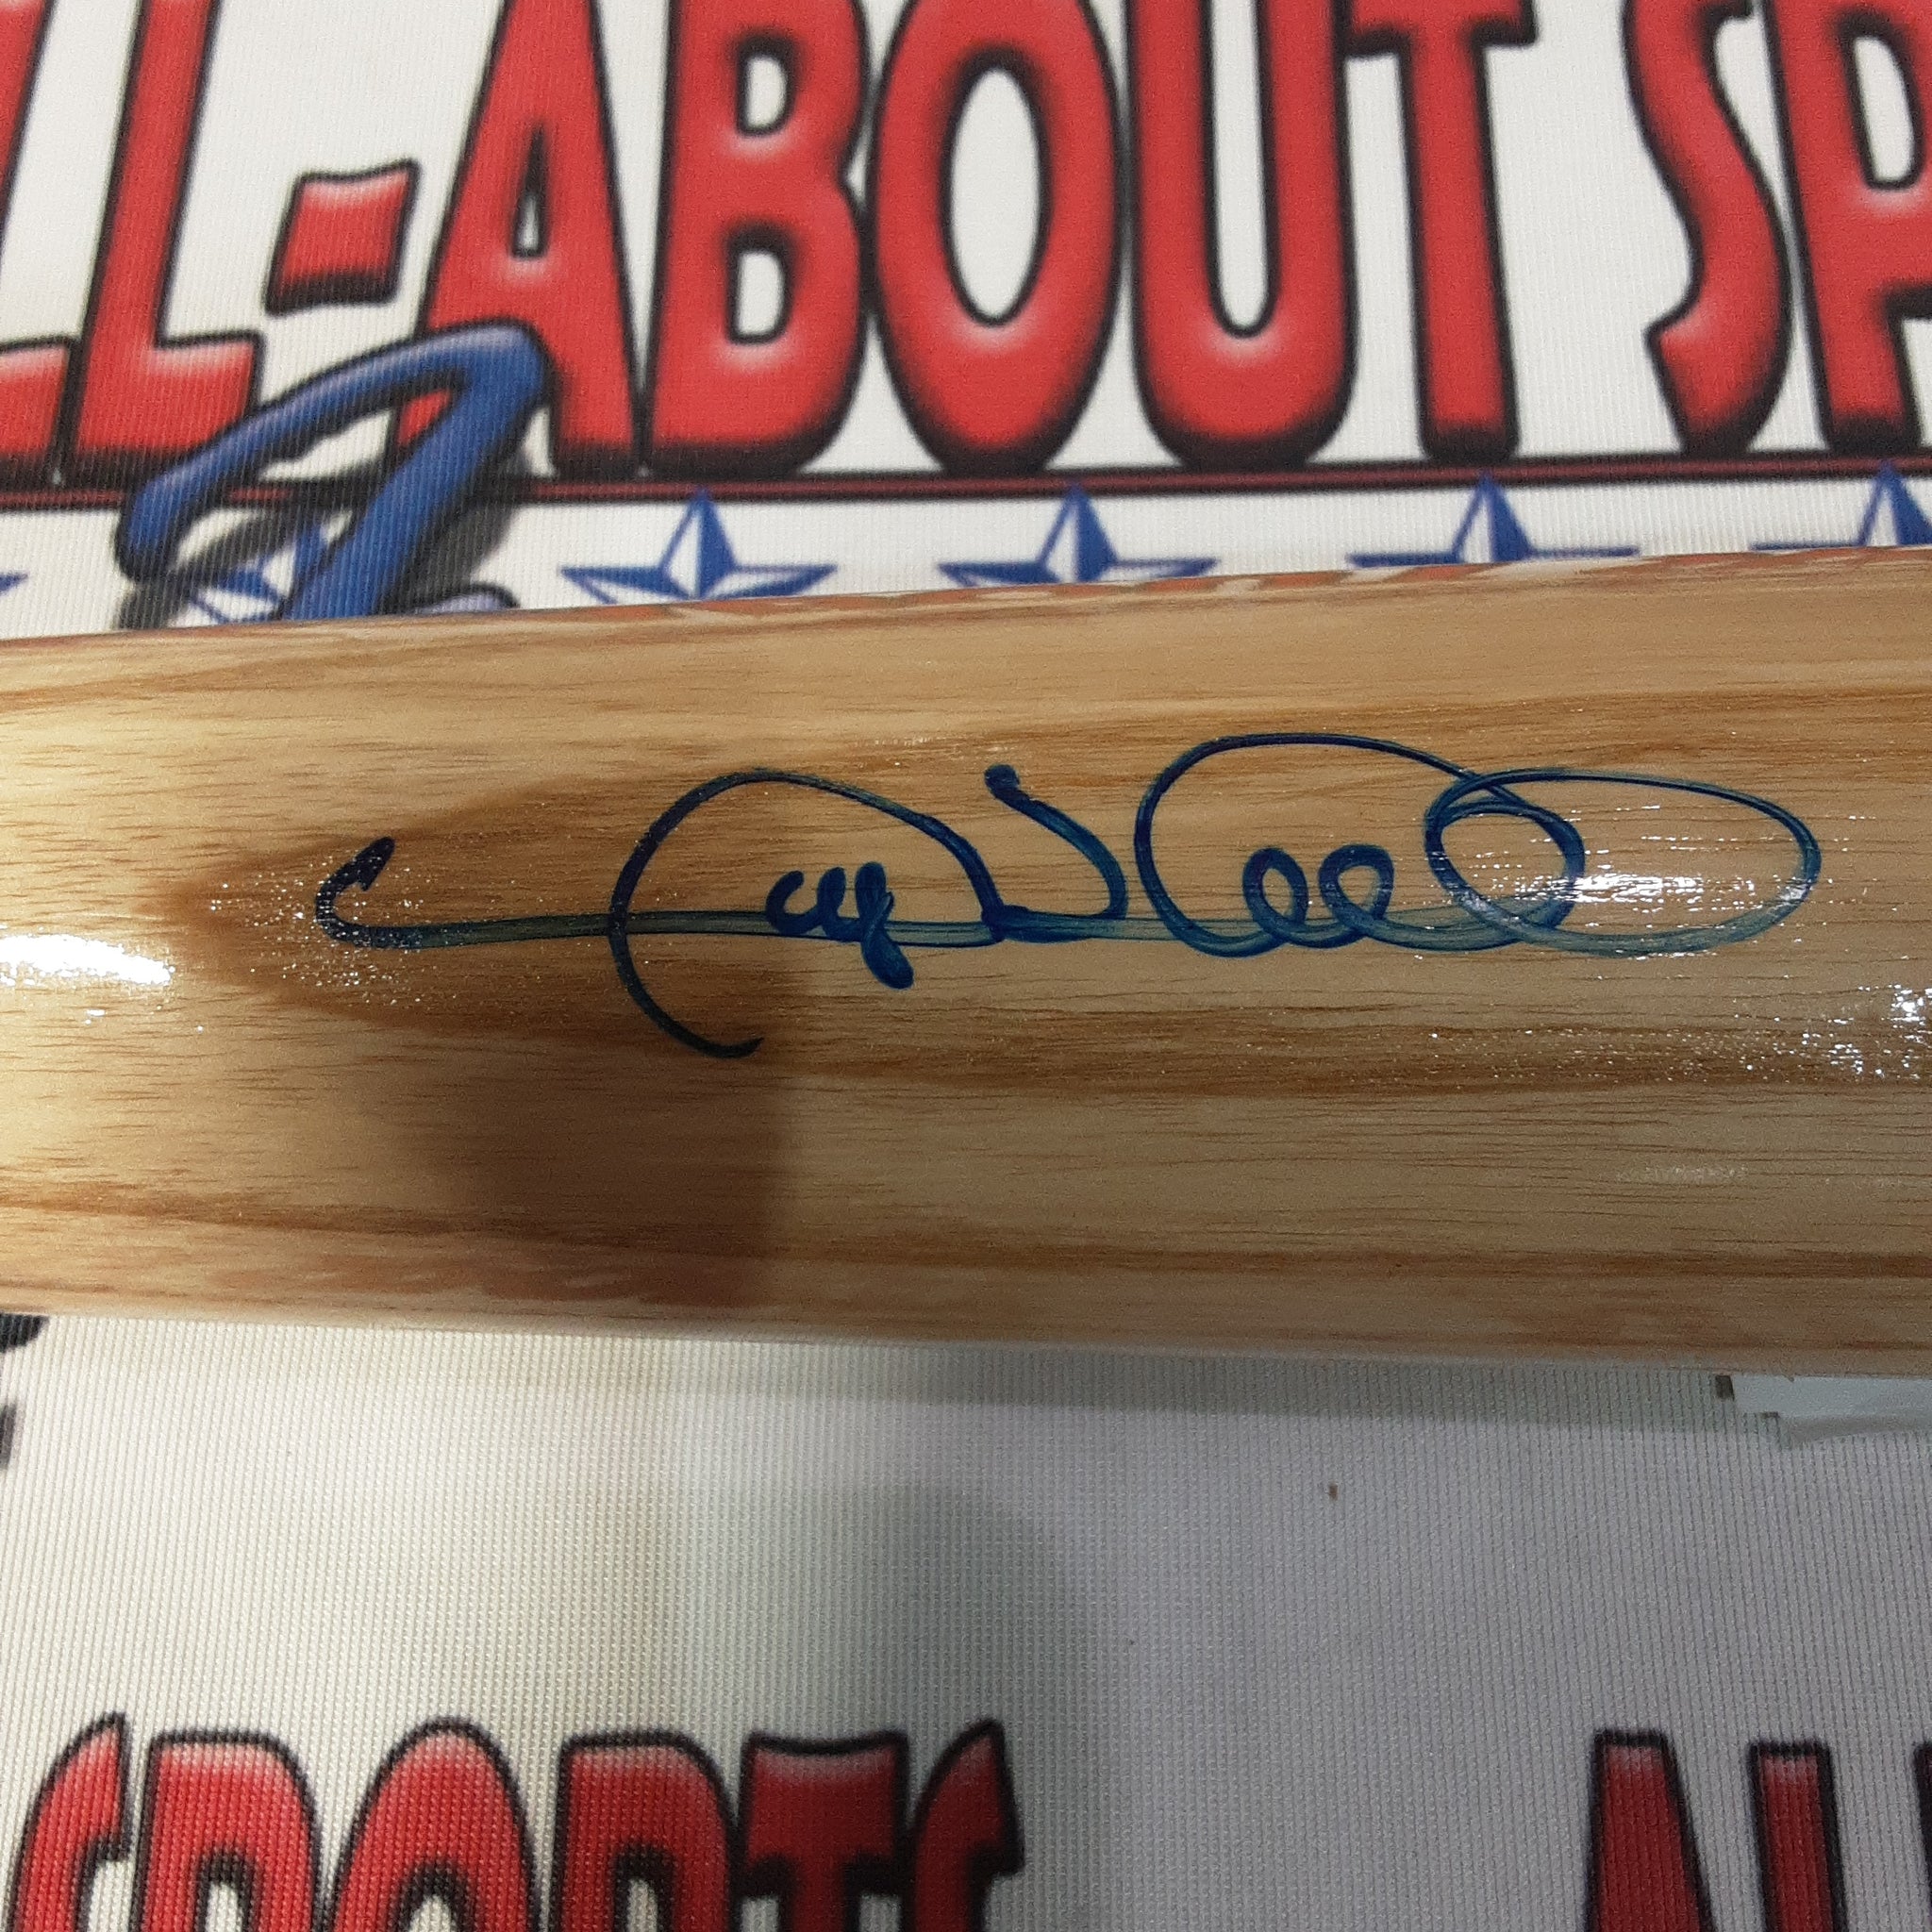 Alan Trammell Autograph Signed HOF Logo Baseball w/ HOF 18 - JSA